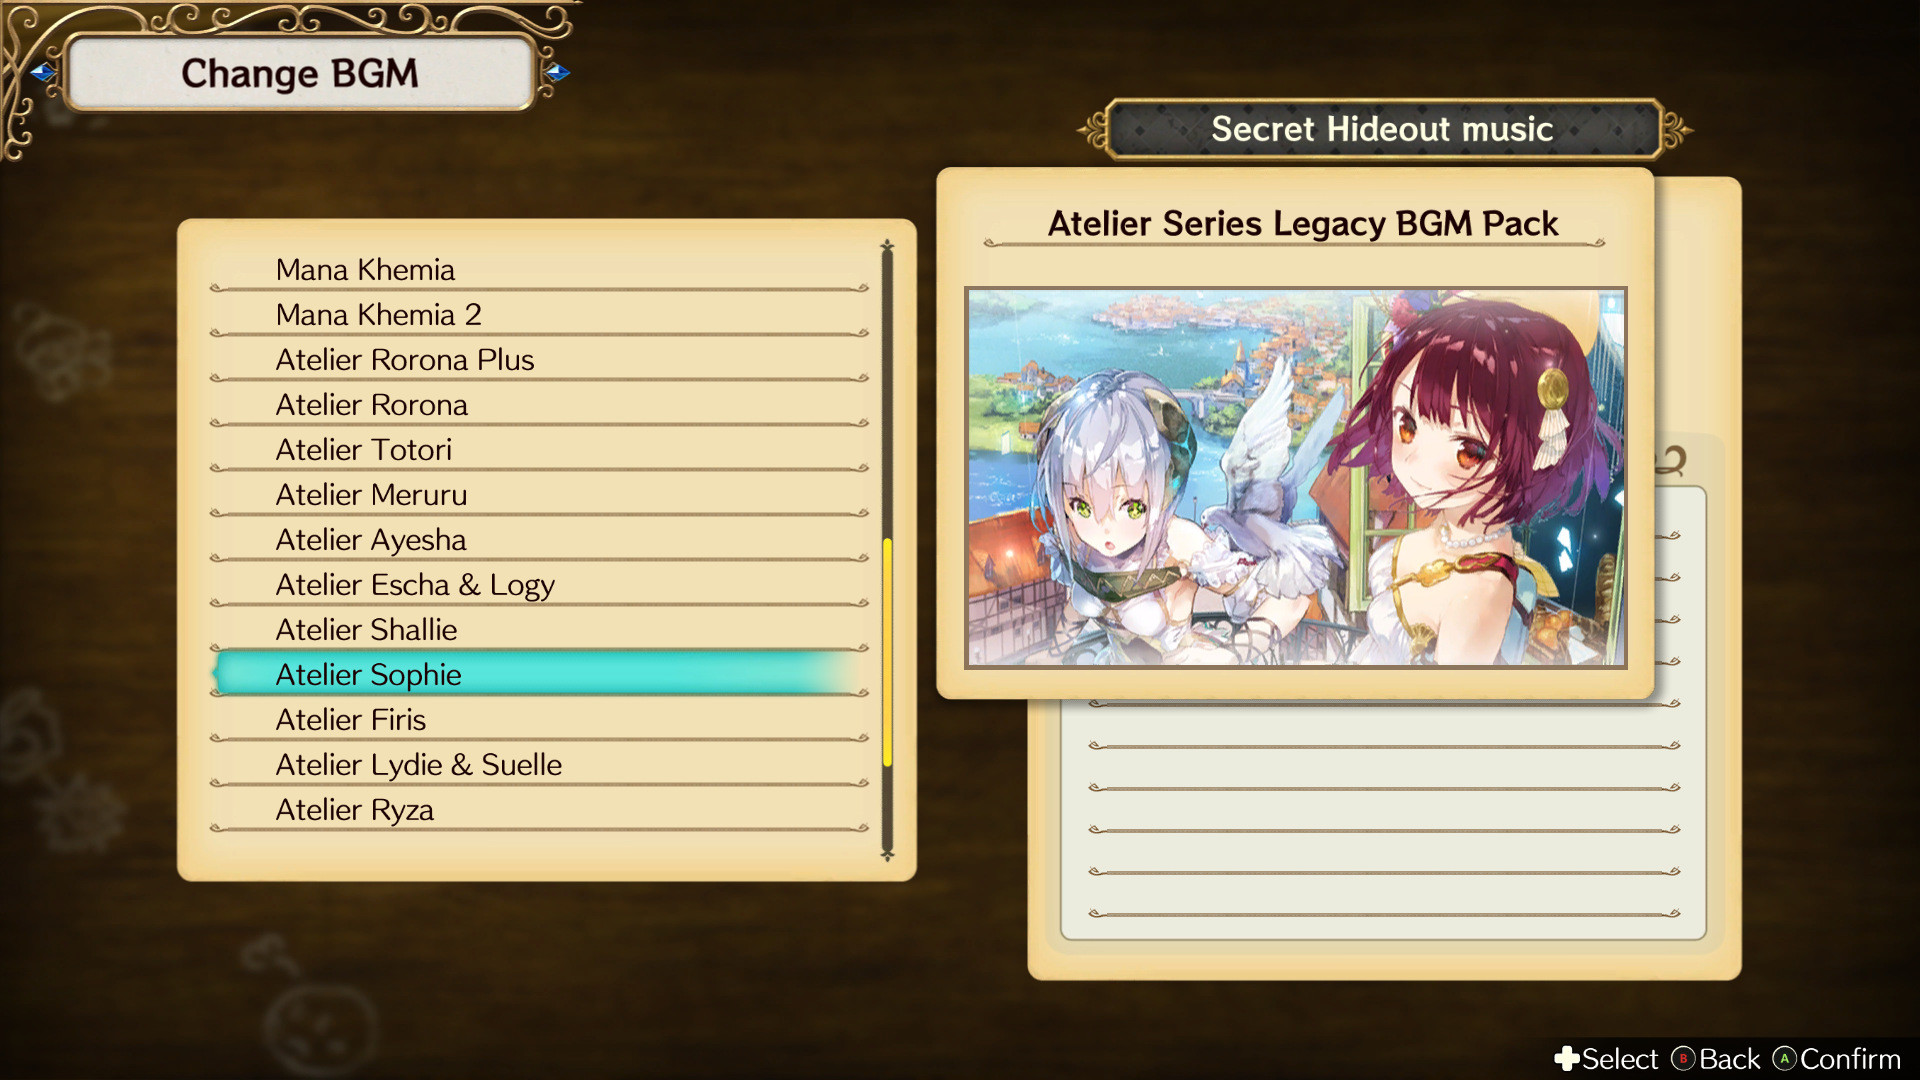 Atelier Ryza: Atelier Series Legacy BGM Pack Featured Screenshot #1